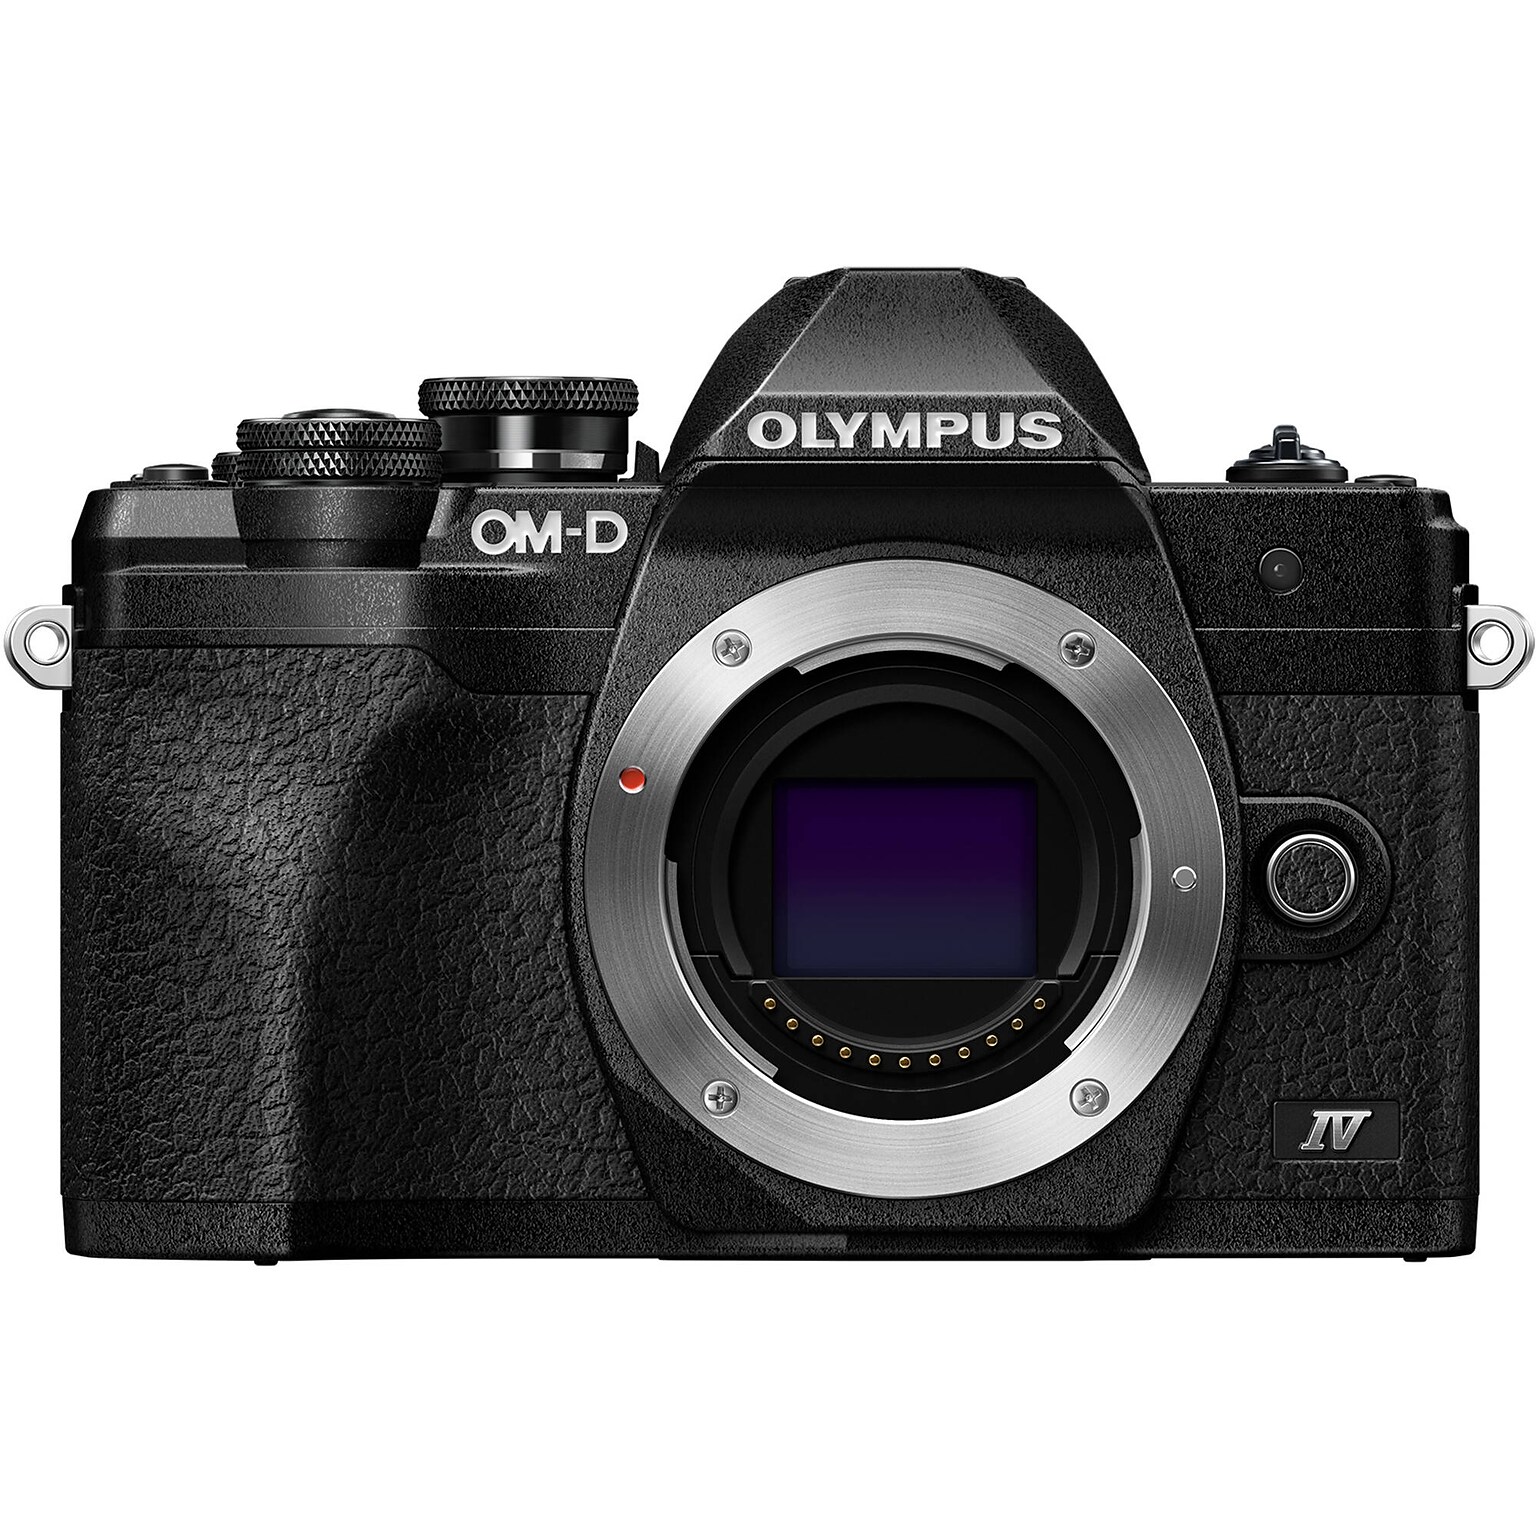 Olympus OM-D E-M10 Mark IV 20.3 Megapixel Mirrorless Camera Body Only, Black (V207130BU000)